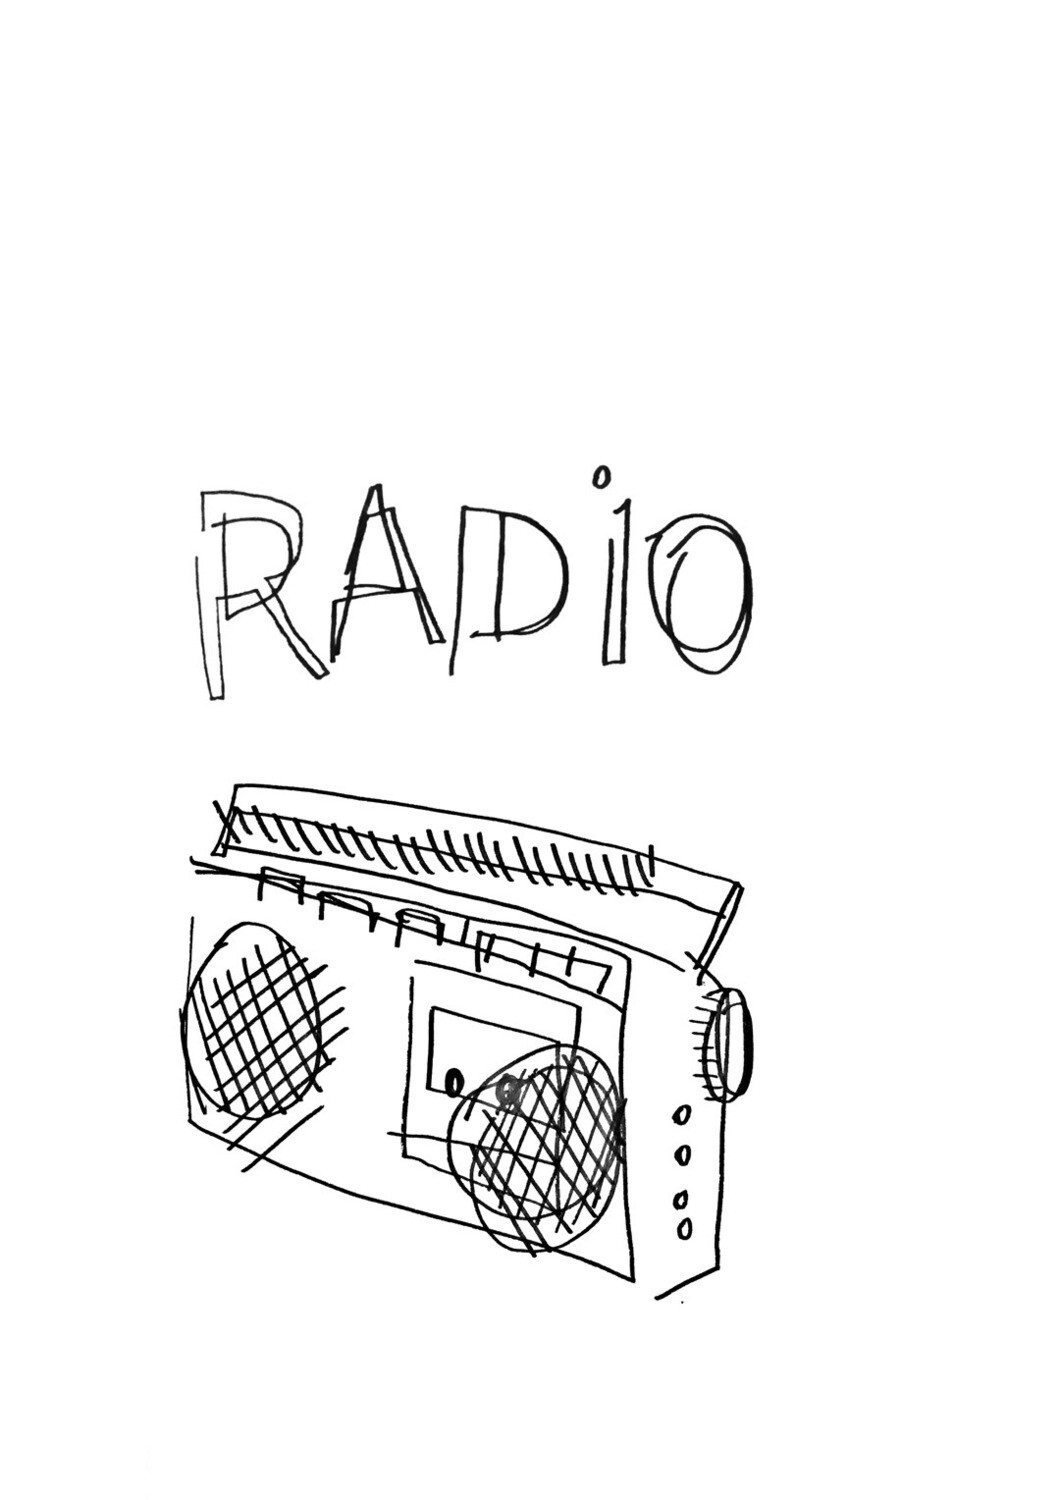 Dessin sans regarder d'une radio